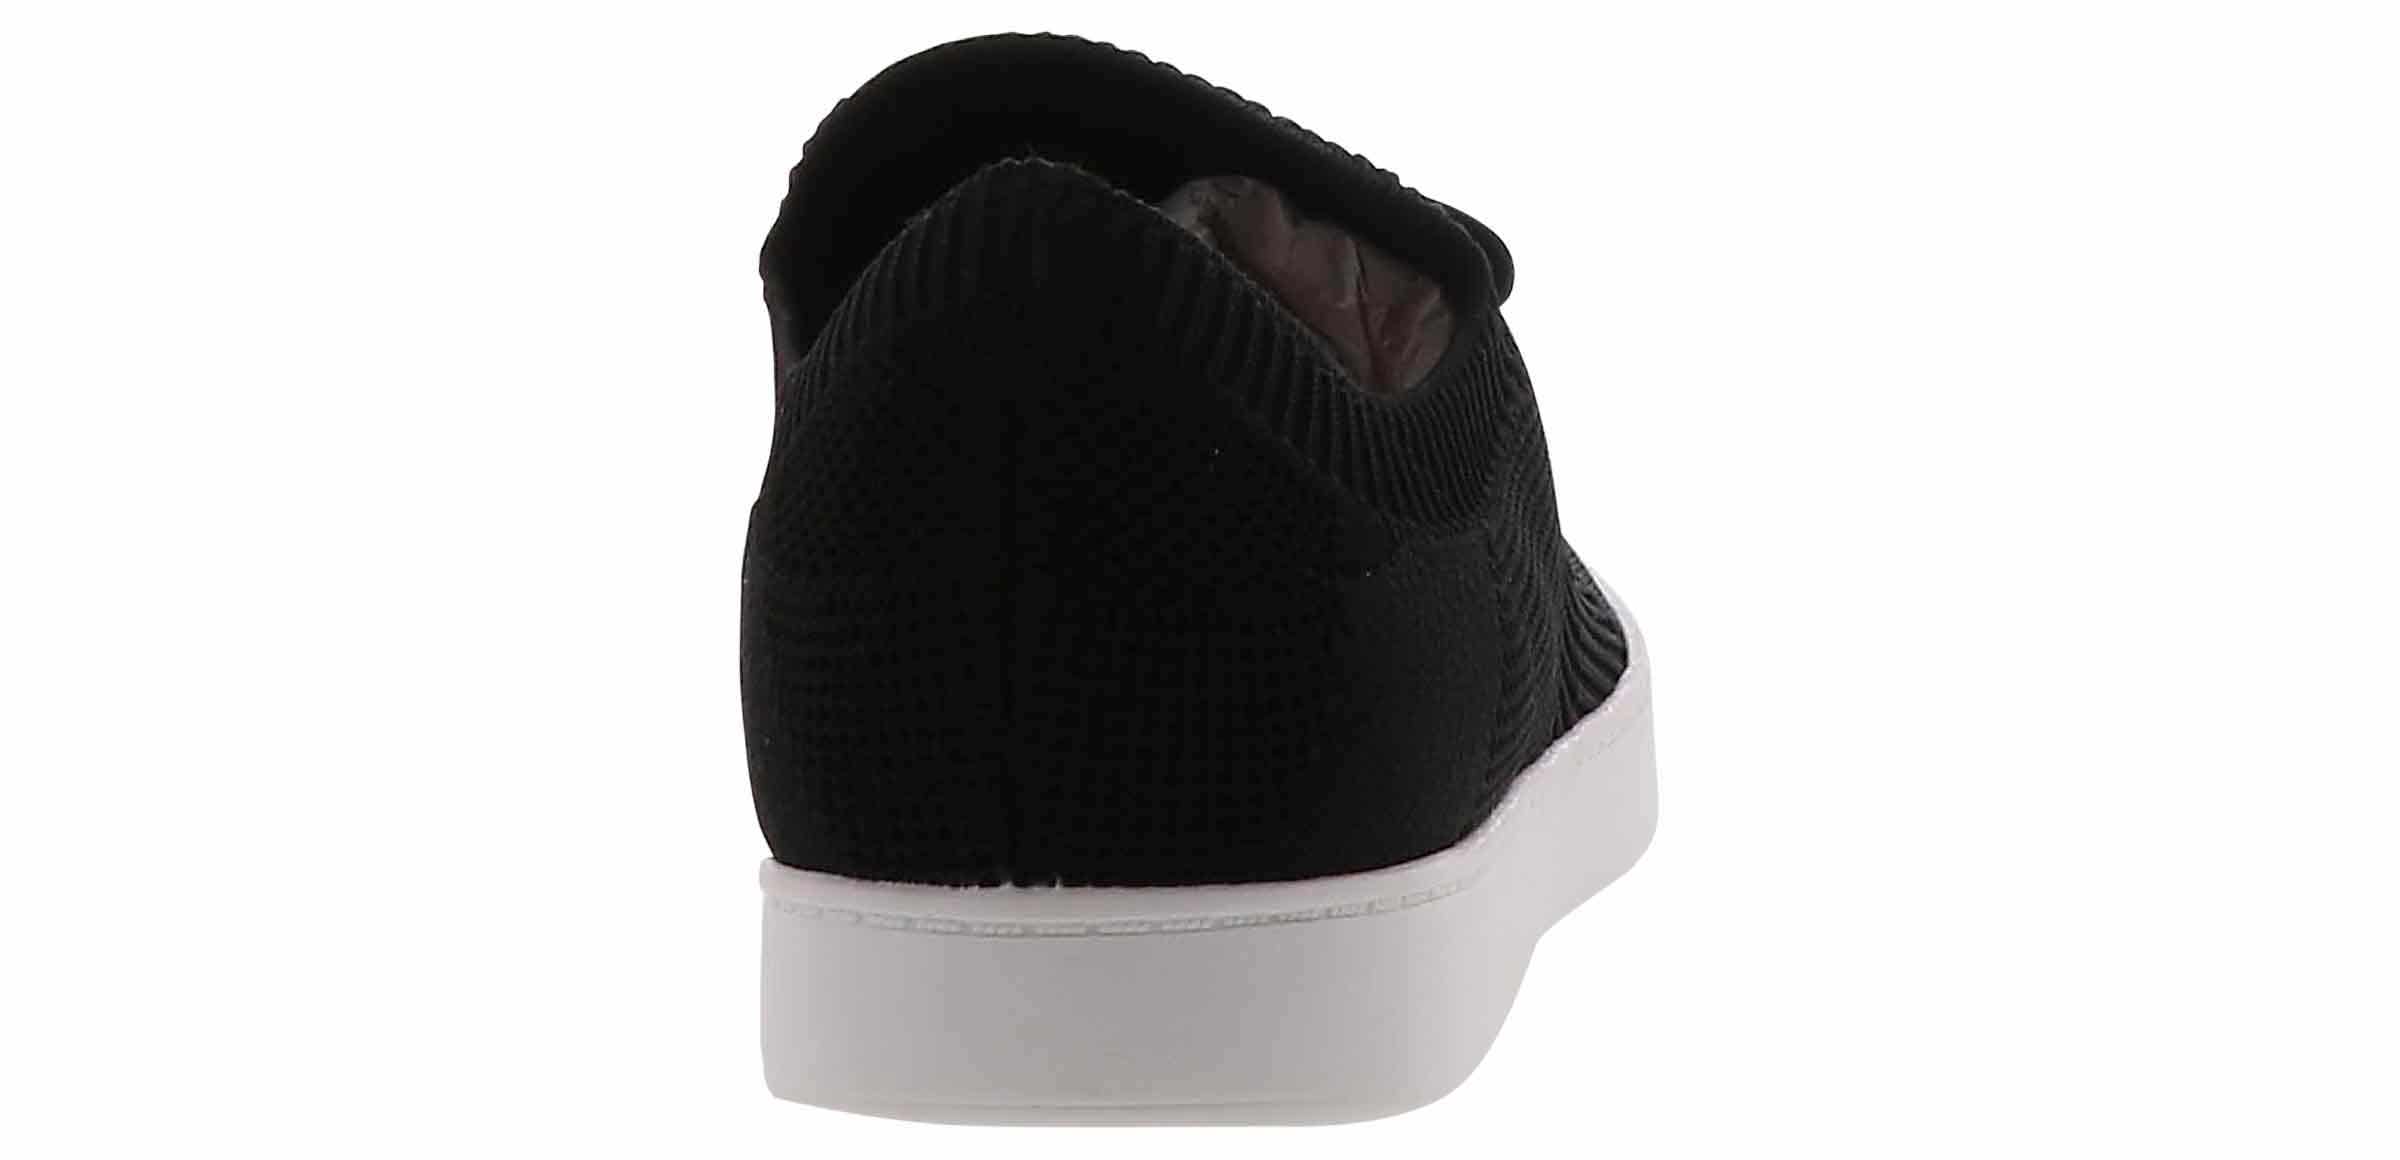 LifeStride Women's Esme 2 Sneaker Black 9.5 for sale online | eBay